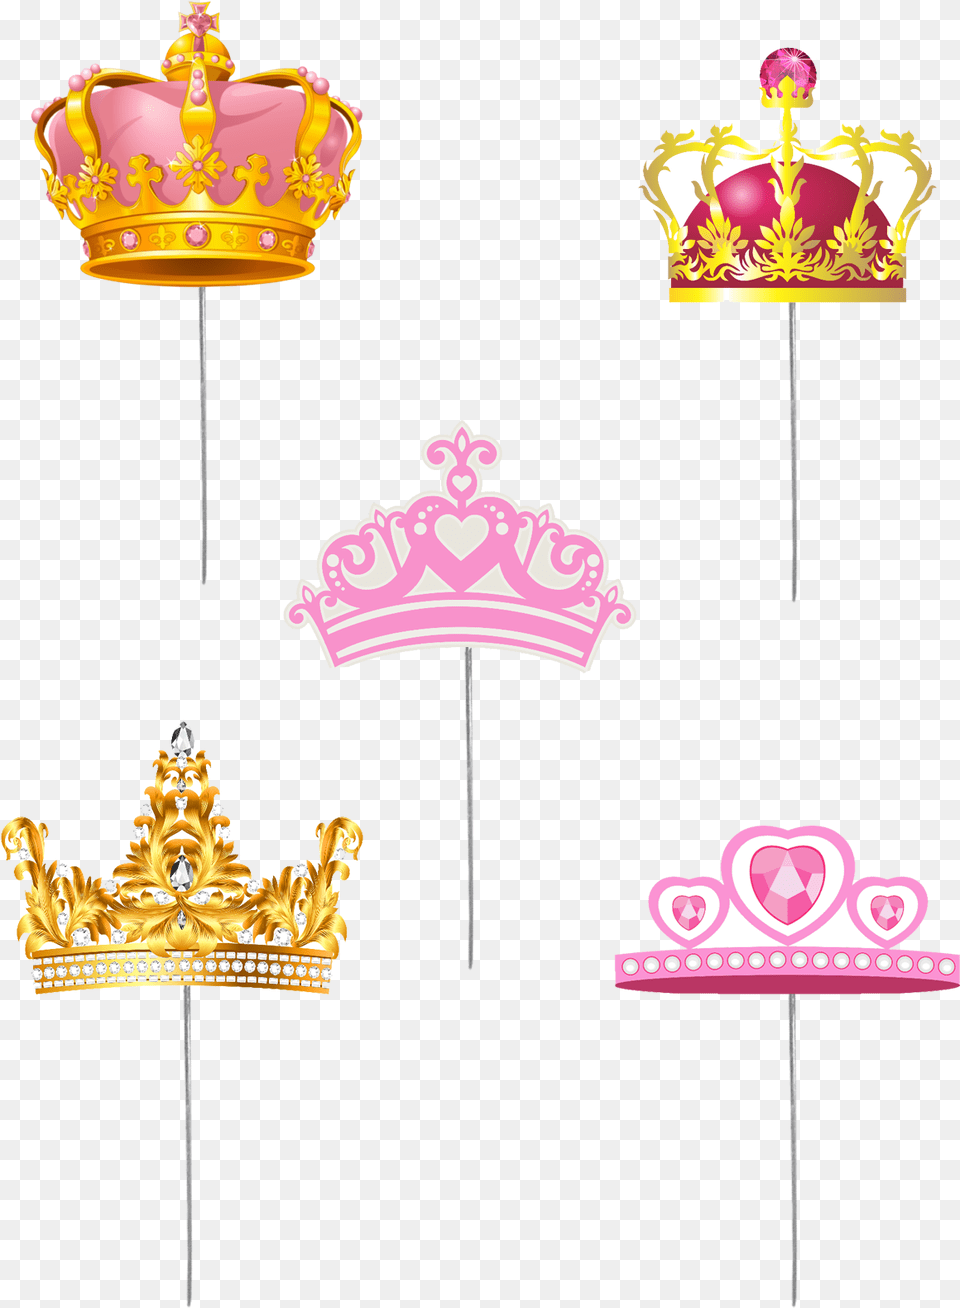 Tag Coroa Bailarina, Accessories, Jewelry, Crown Png